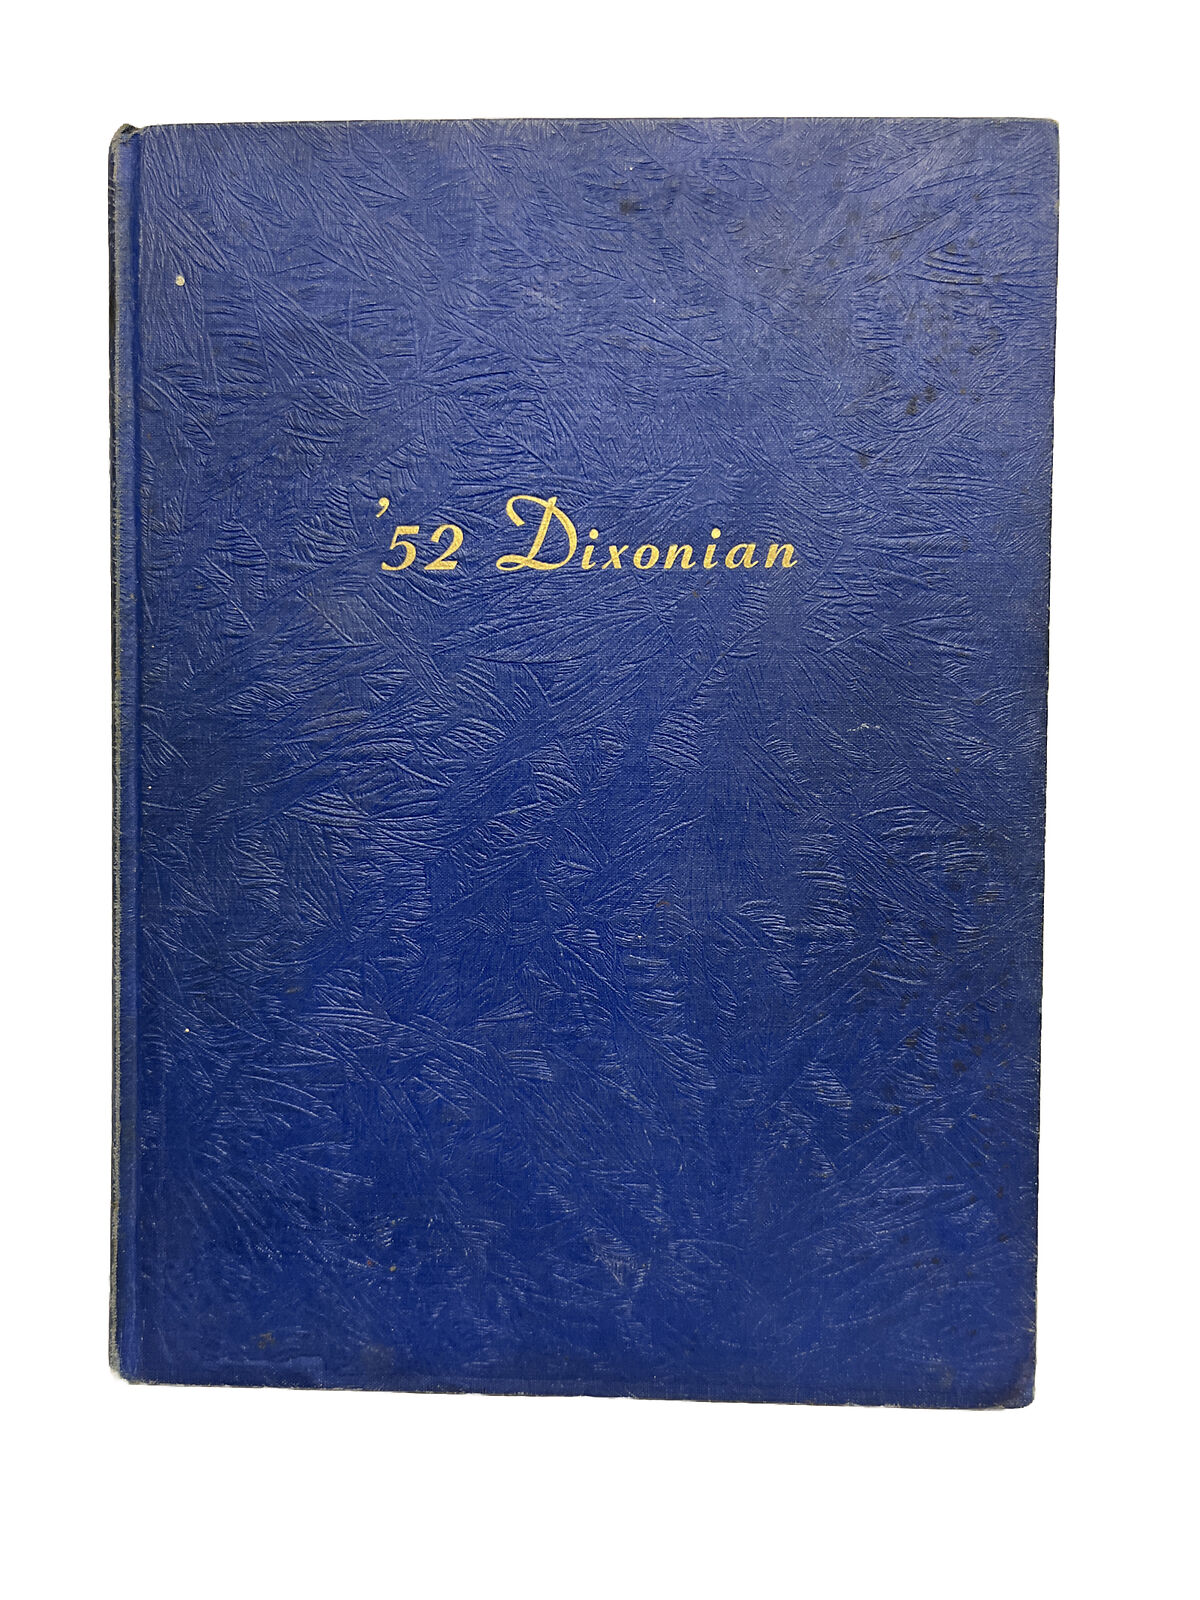 1952 Dixon HIGH SCHOOL YEARBOOK Dixon IL Illinois Dixonian Tons of Signatures